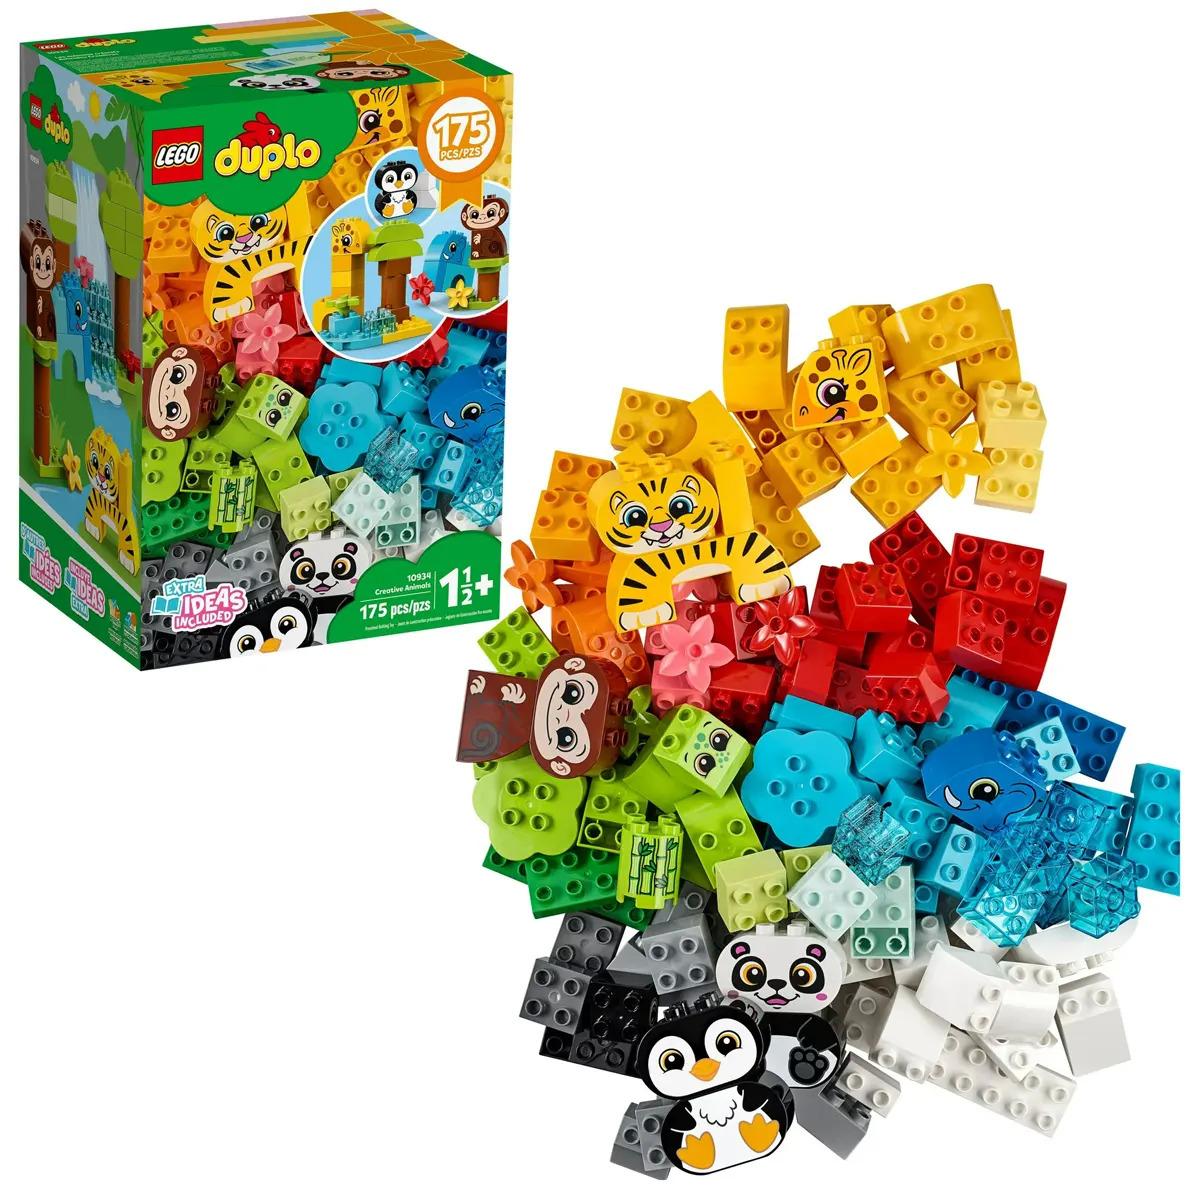 LEGO DUPLO Classic Creative Animals Building Set 10934 for $25